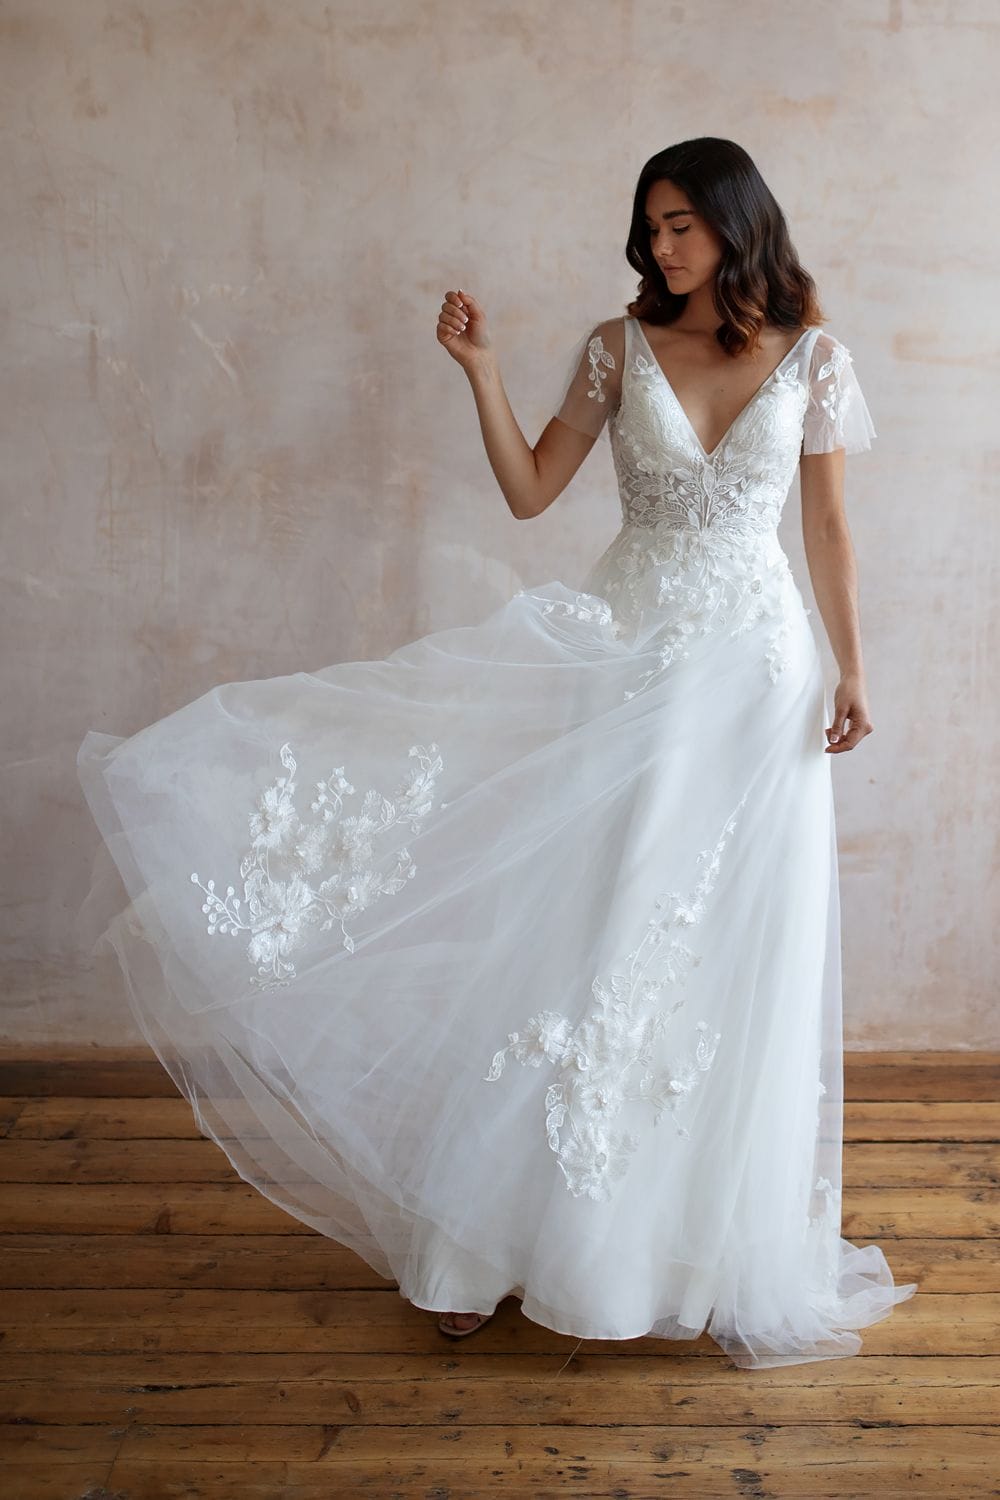 All About Love - Wedding Dresses & Bridal Gowns | Milla Nova